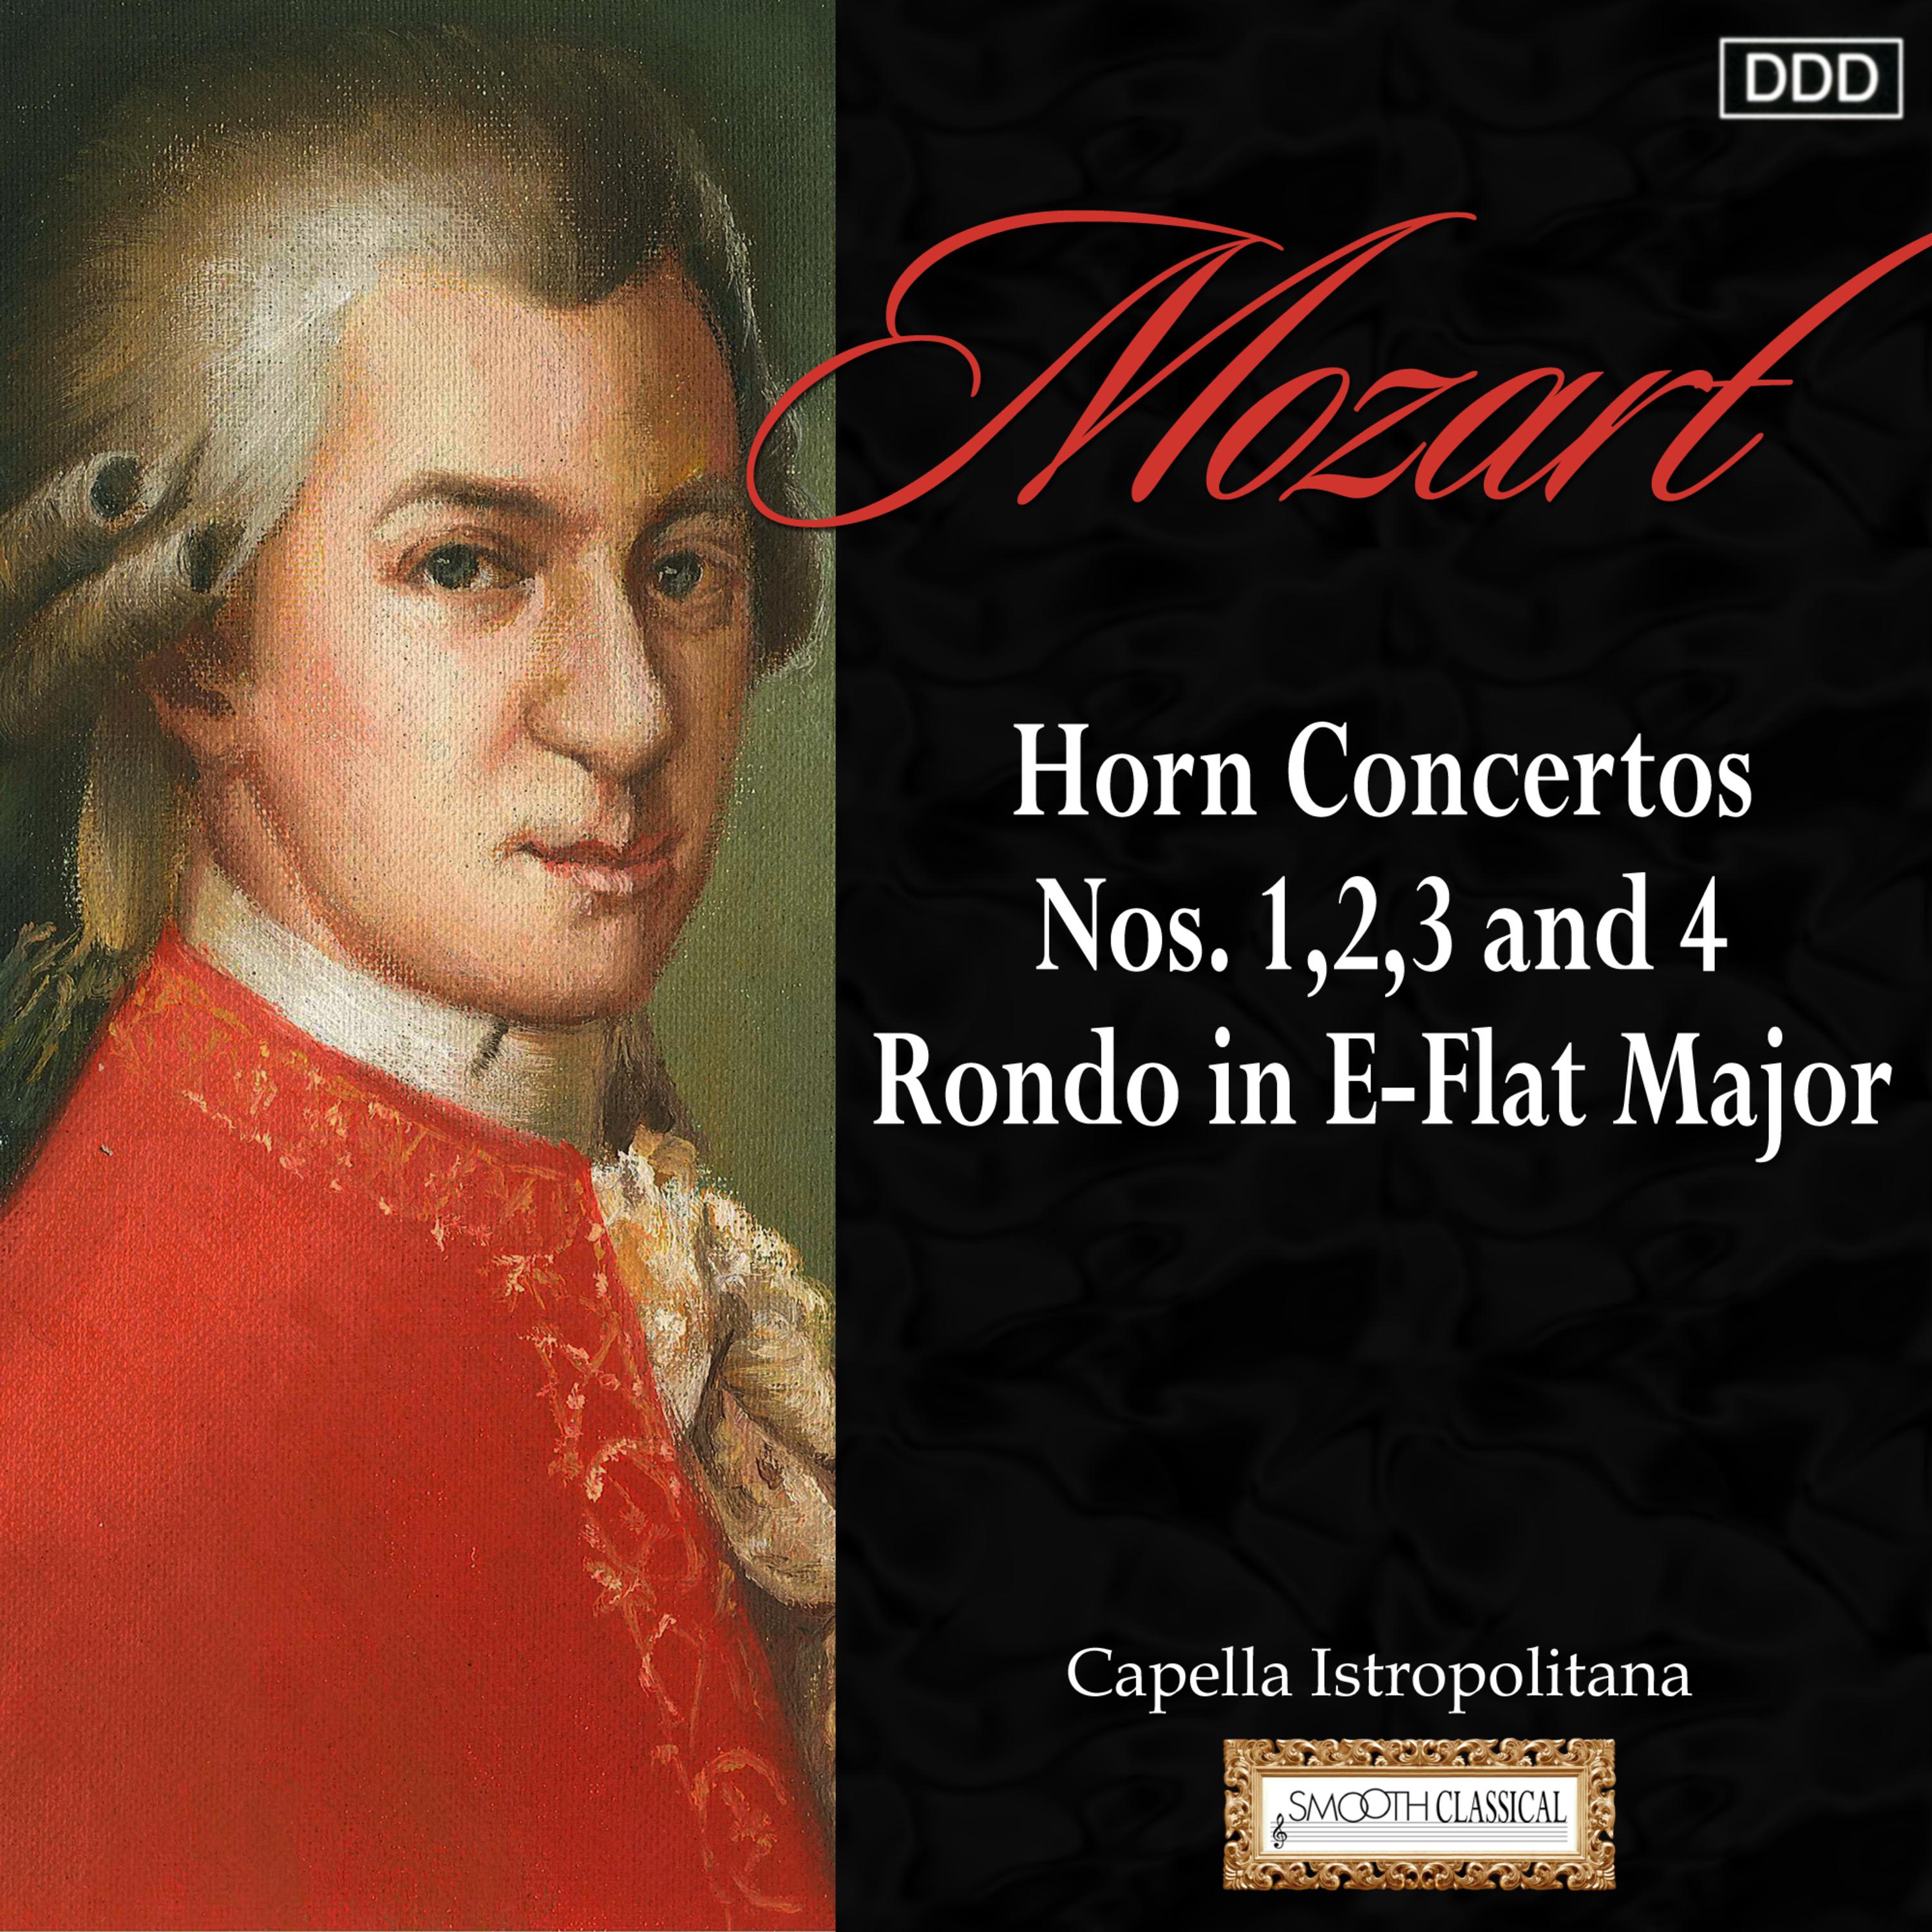 Horn Concerto No. 2 in E-Flat Major, K. 417: I. Allegro maestoso